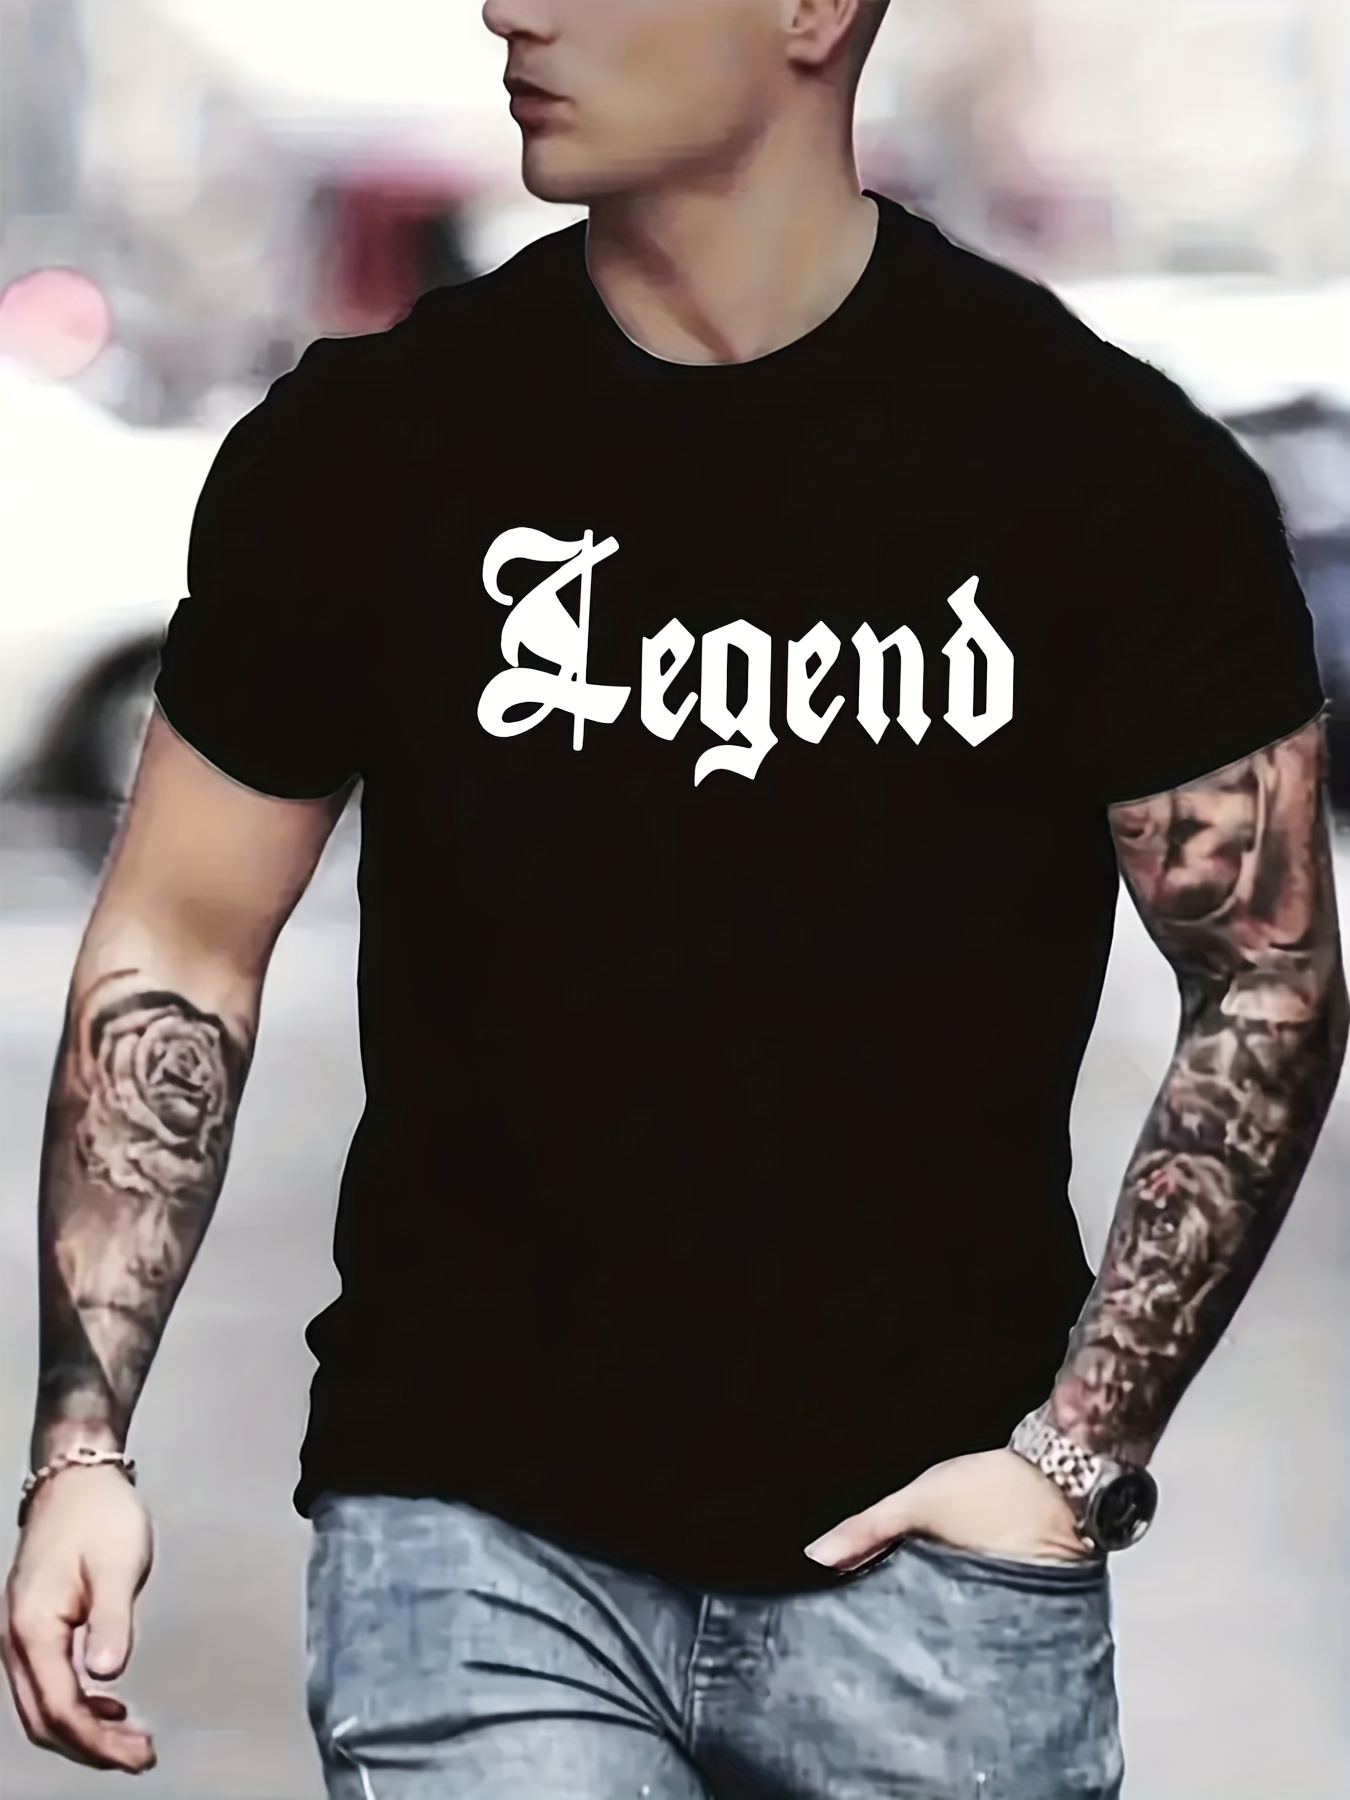 Legend Shirt - Temu